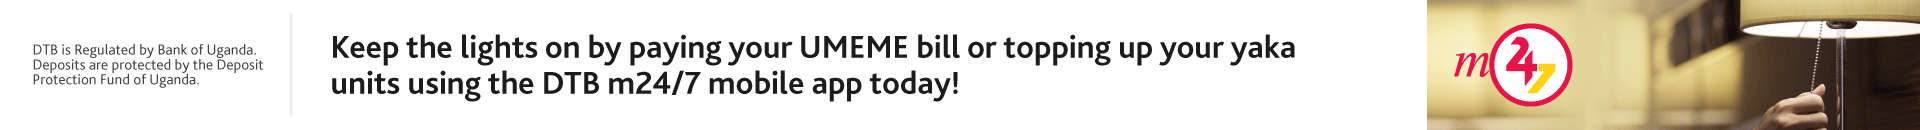 Pay umeme bills via dtb  mobile app